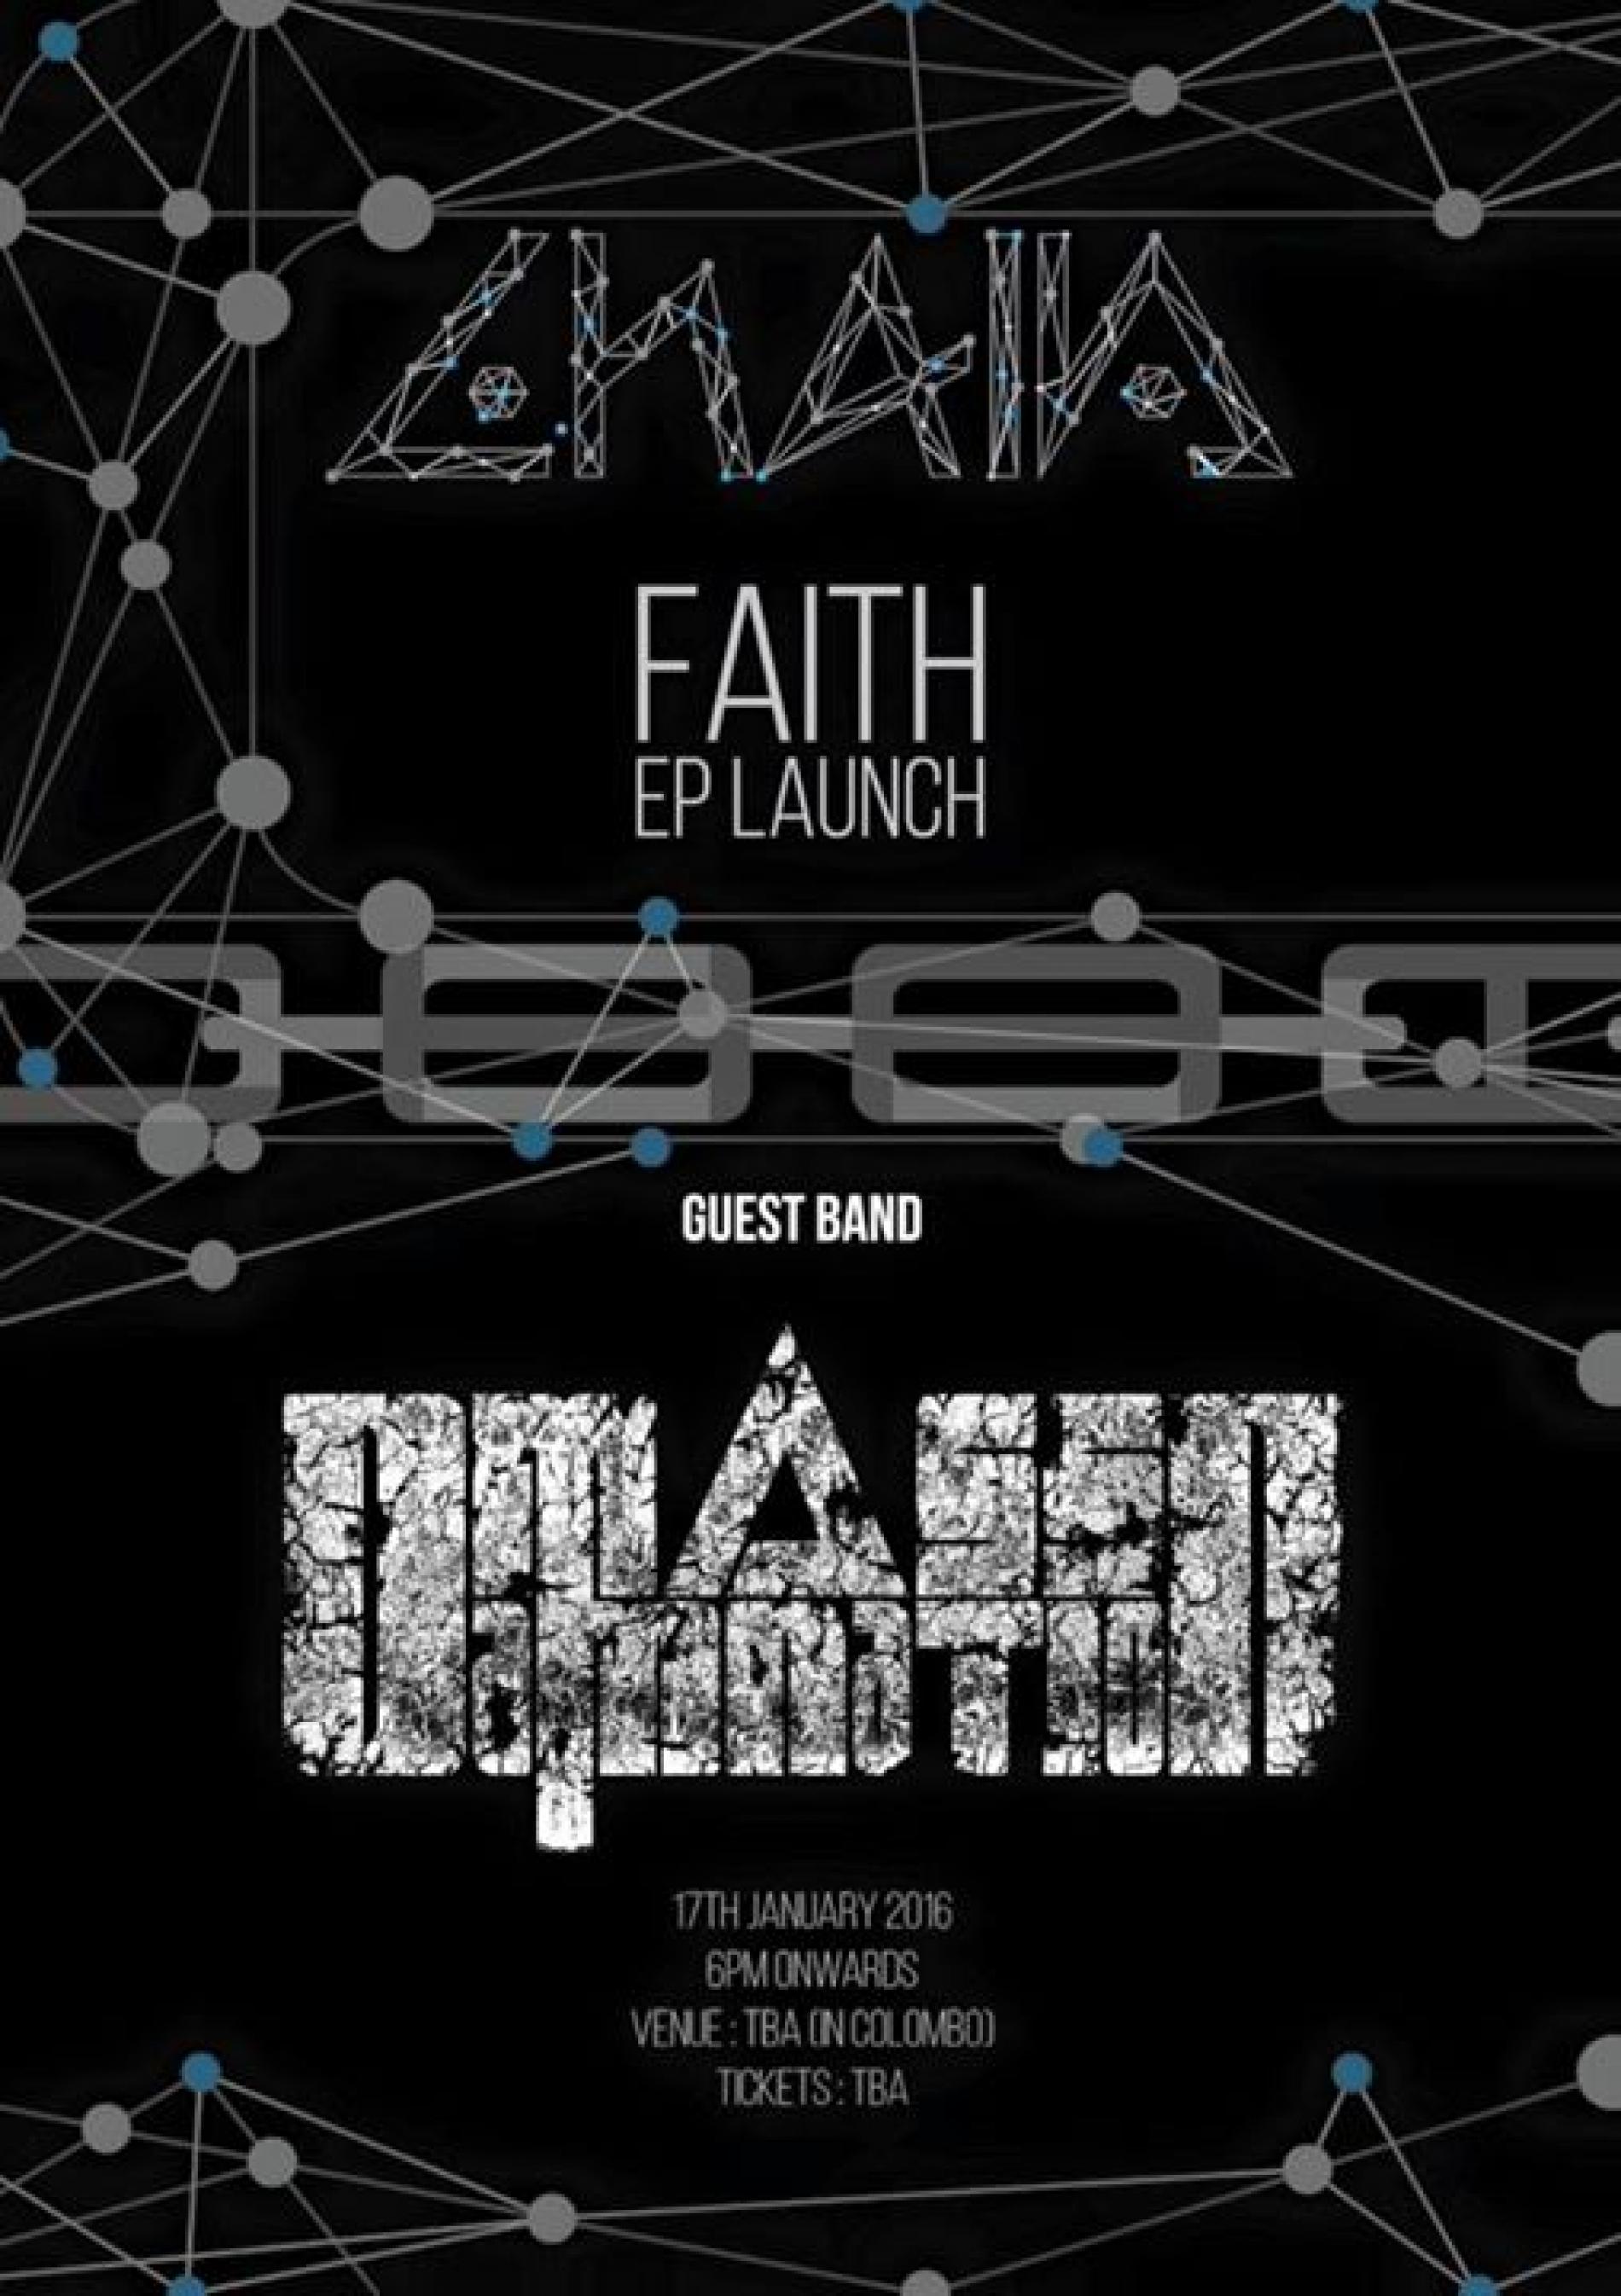 Chain: “Faith” EP Launch